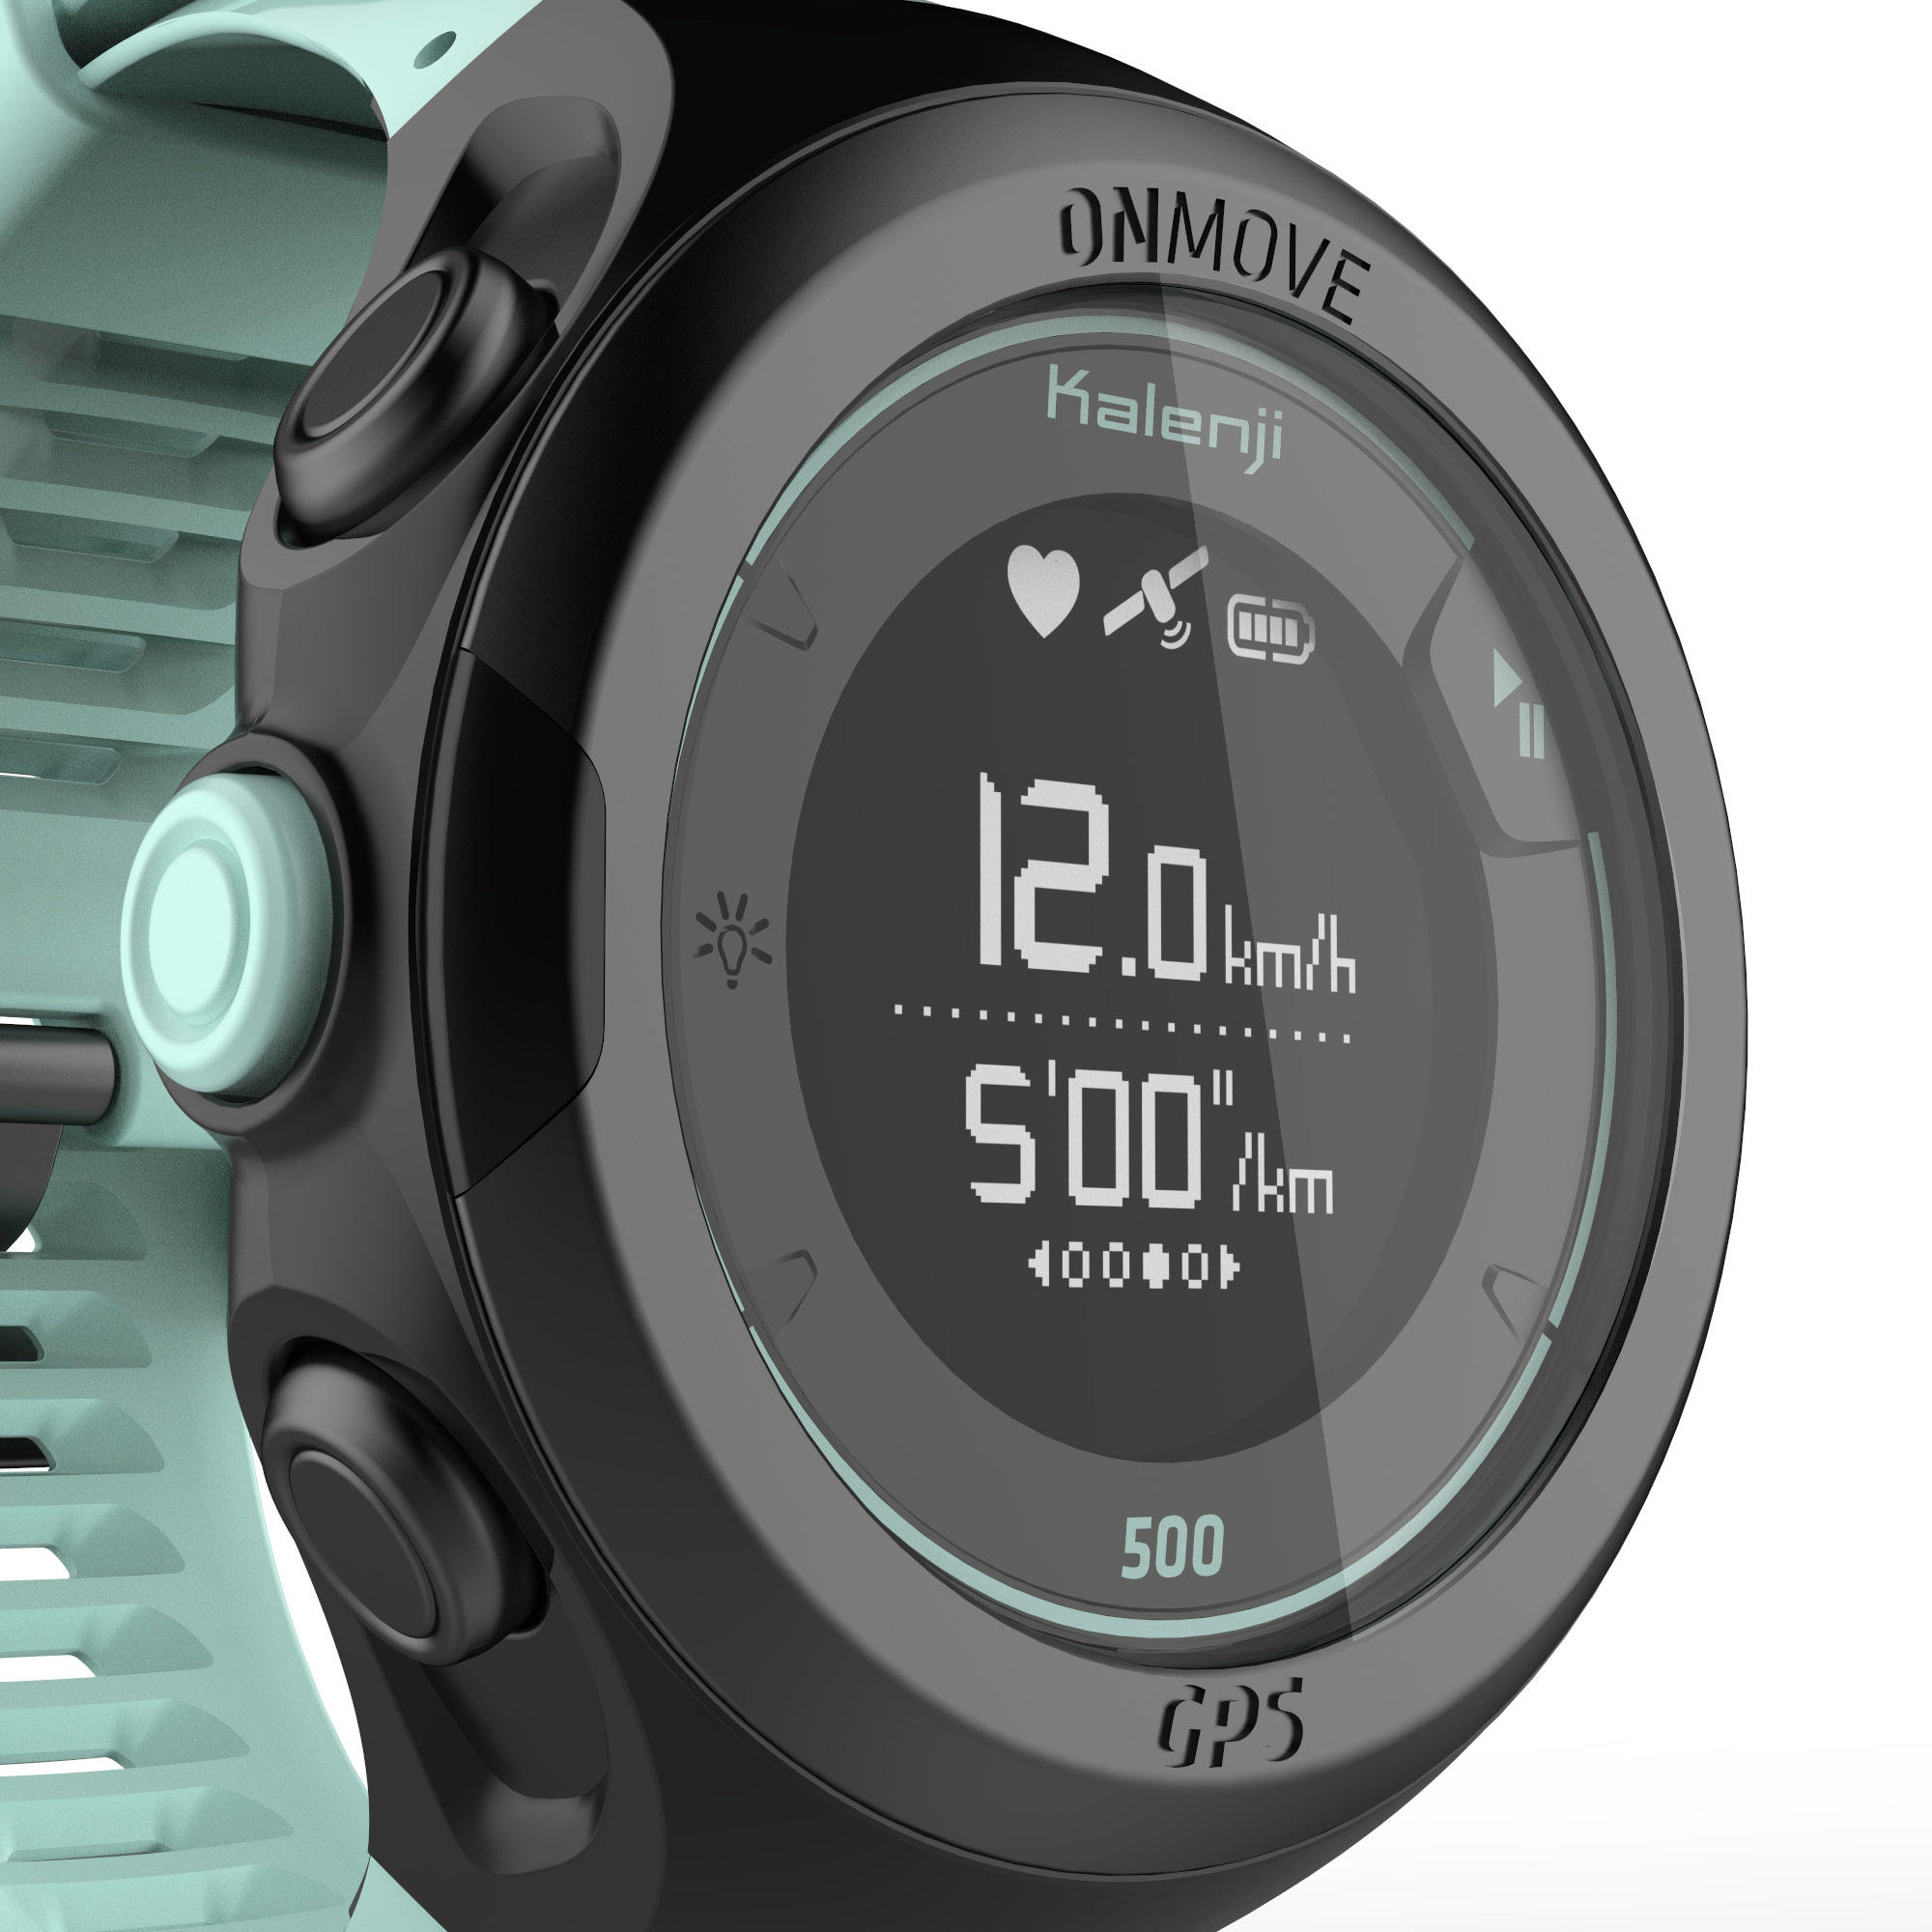 ONmove 500 GPS running watch and wrist heart rate monitor - sea green 12/17